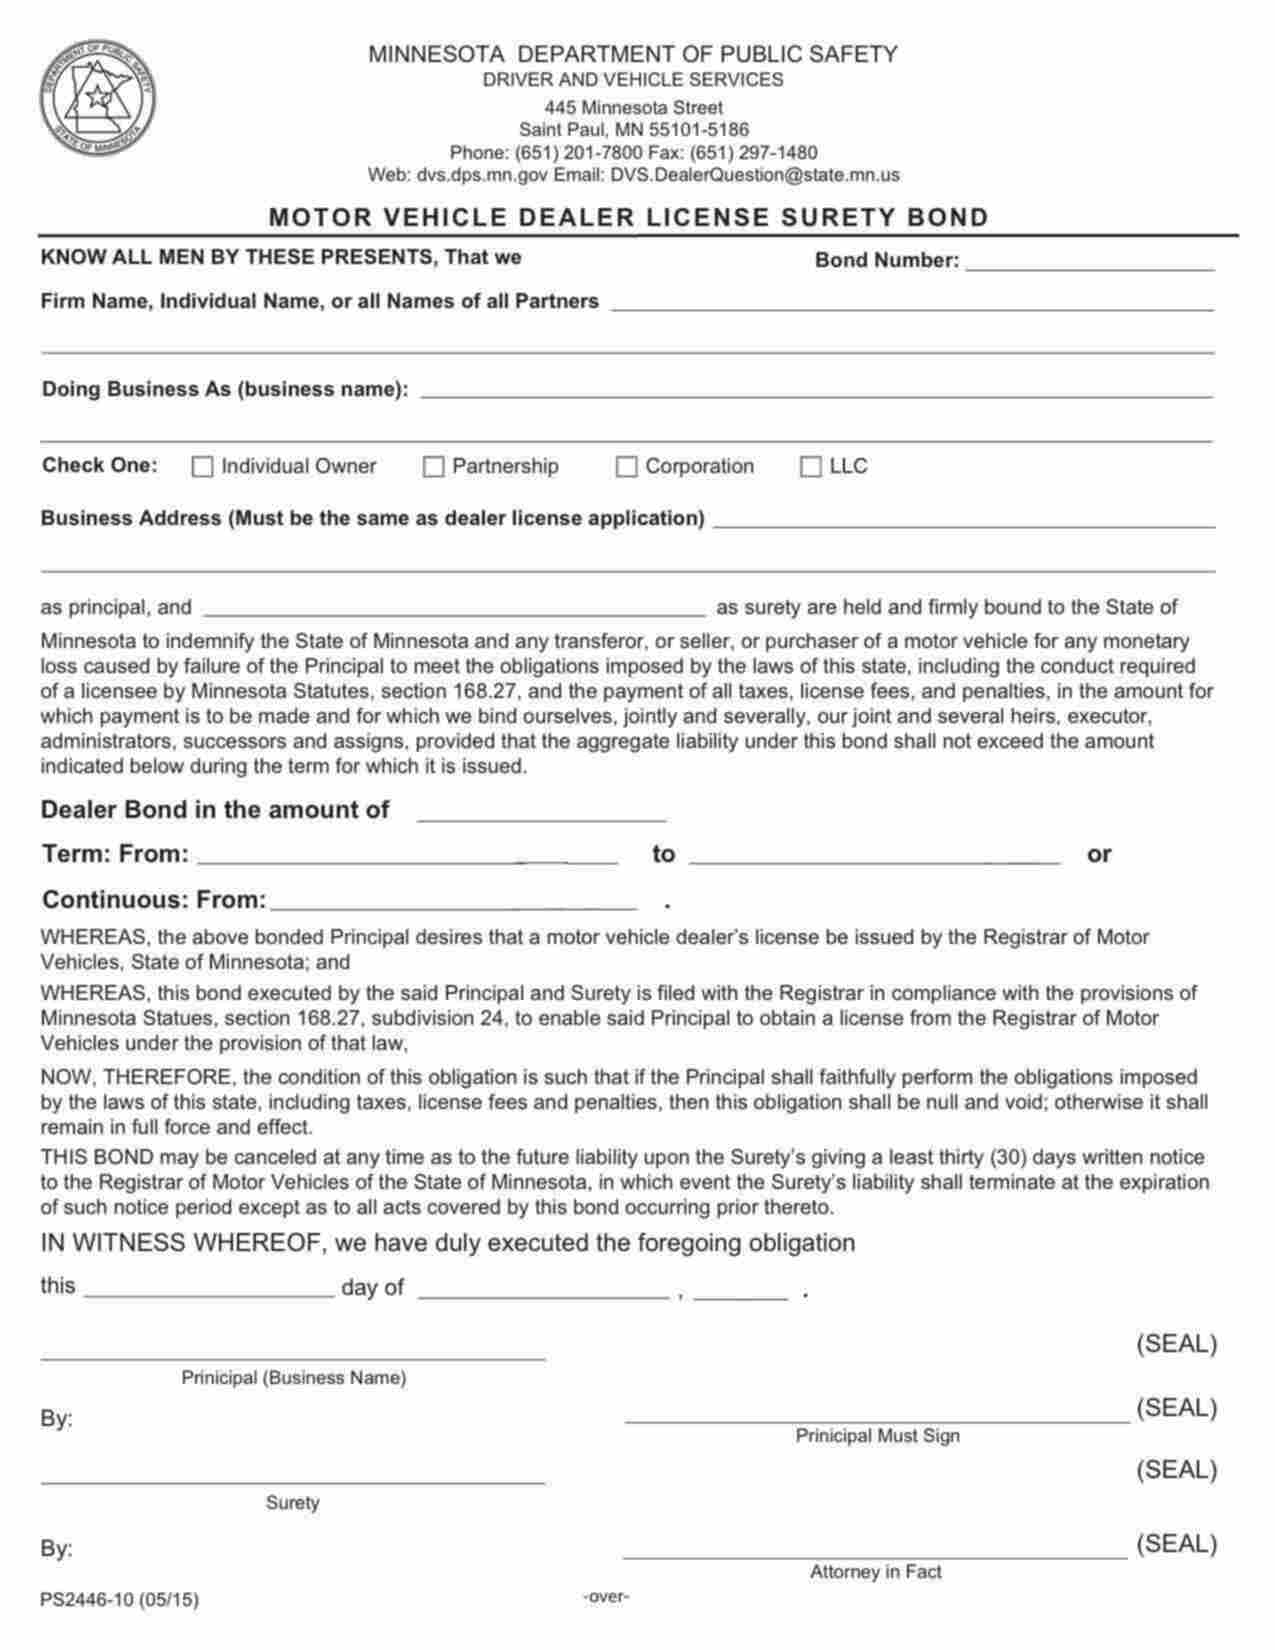 Minnesota Motor Vehicle Dealer - LLC Bond Form